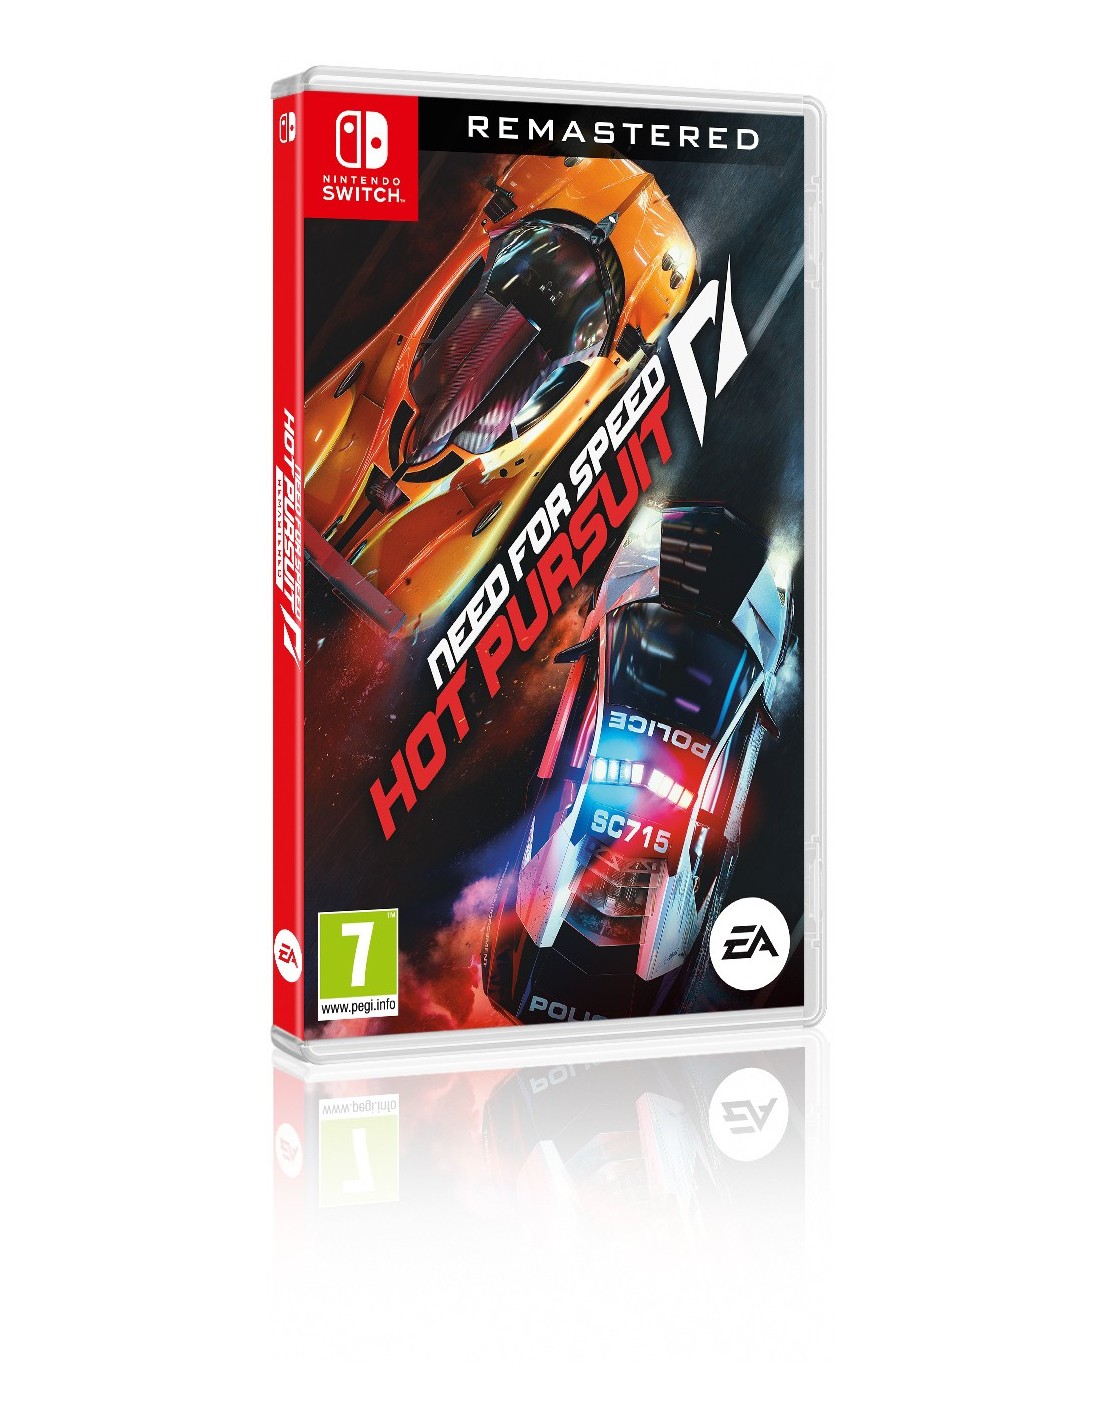 Electronic Arts Inglés, for Speed: Need Nintendo Remastered Switch Español Pursuit Hot Remasterizada